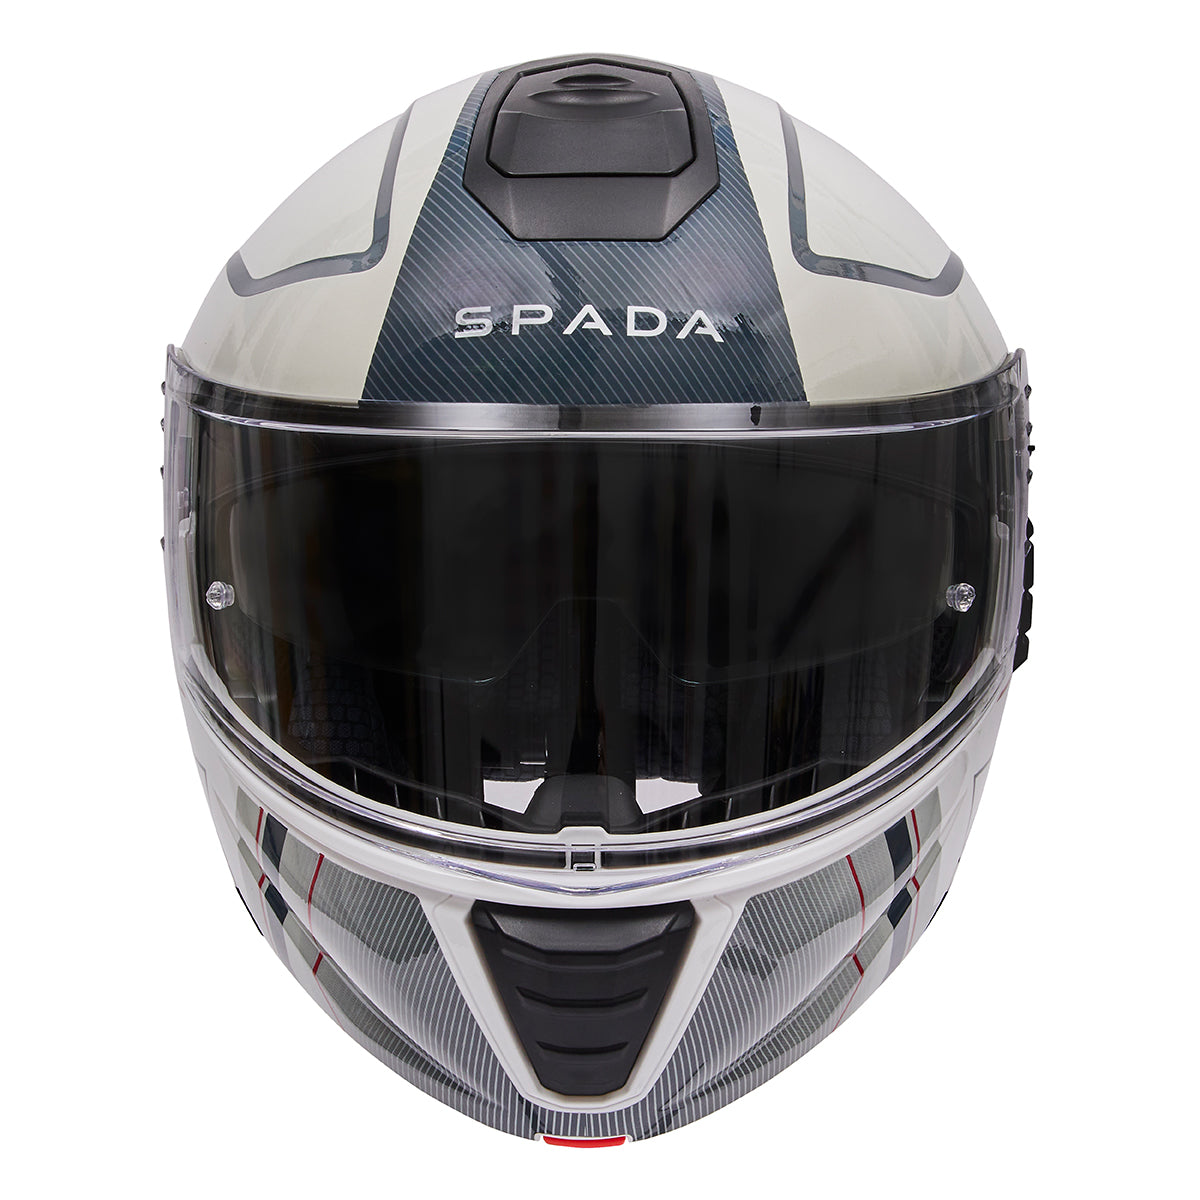 Spada Helmet Orion 2 Element White Grey Red